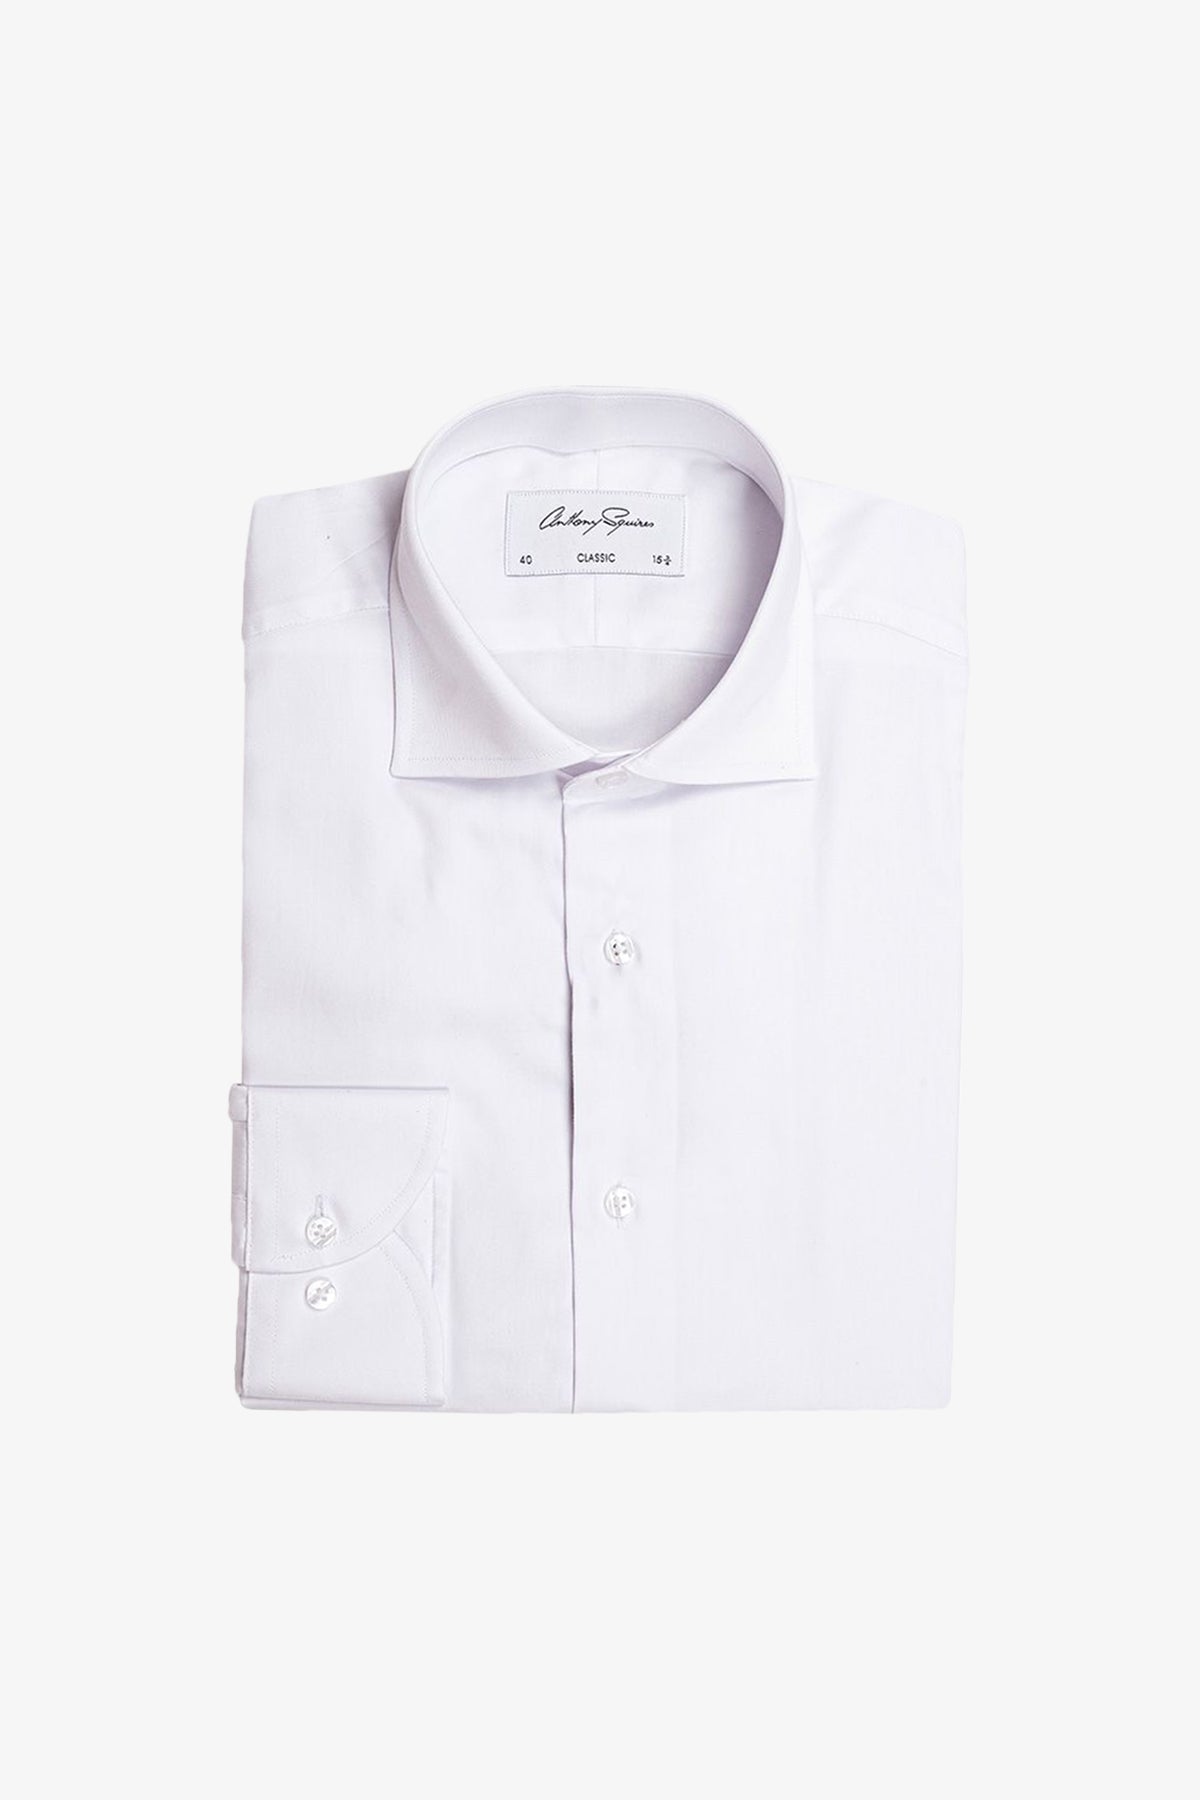 Miles - White Shirt